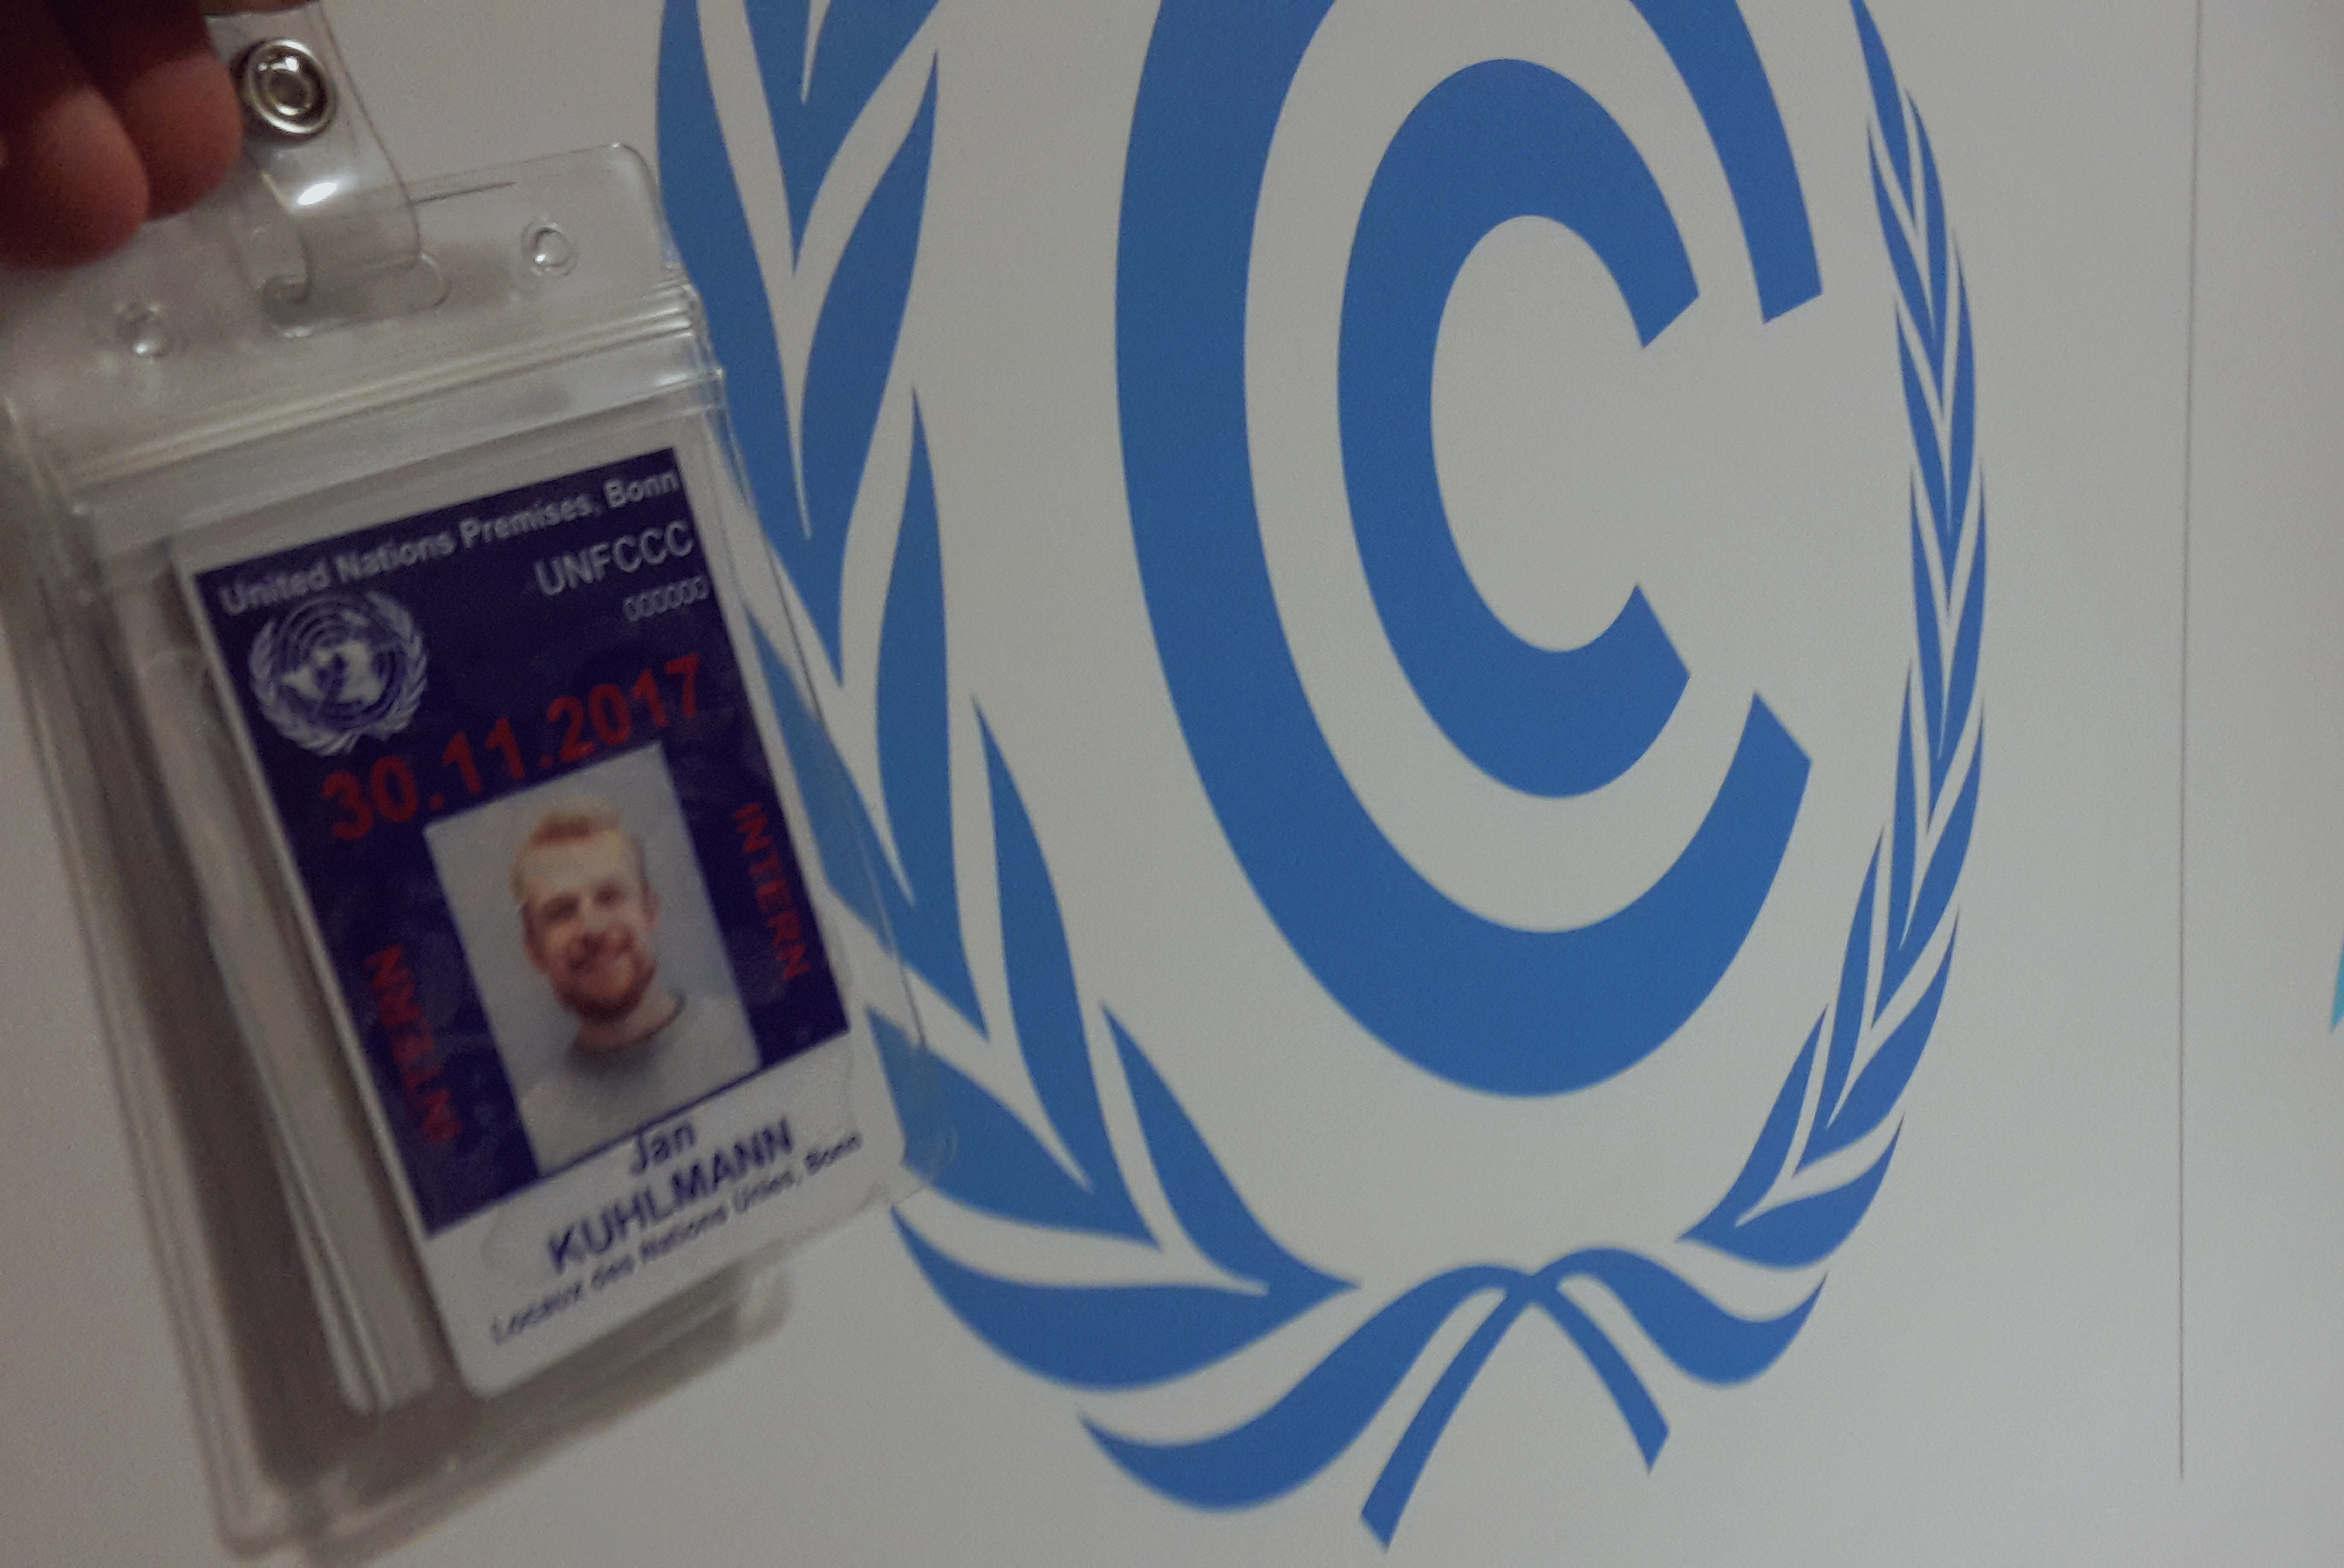 UNFCCC Intern, Field Assistant.2